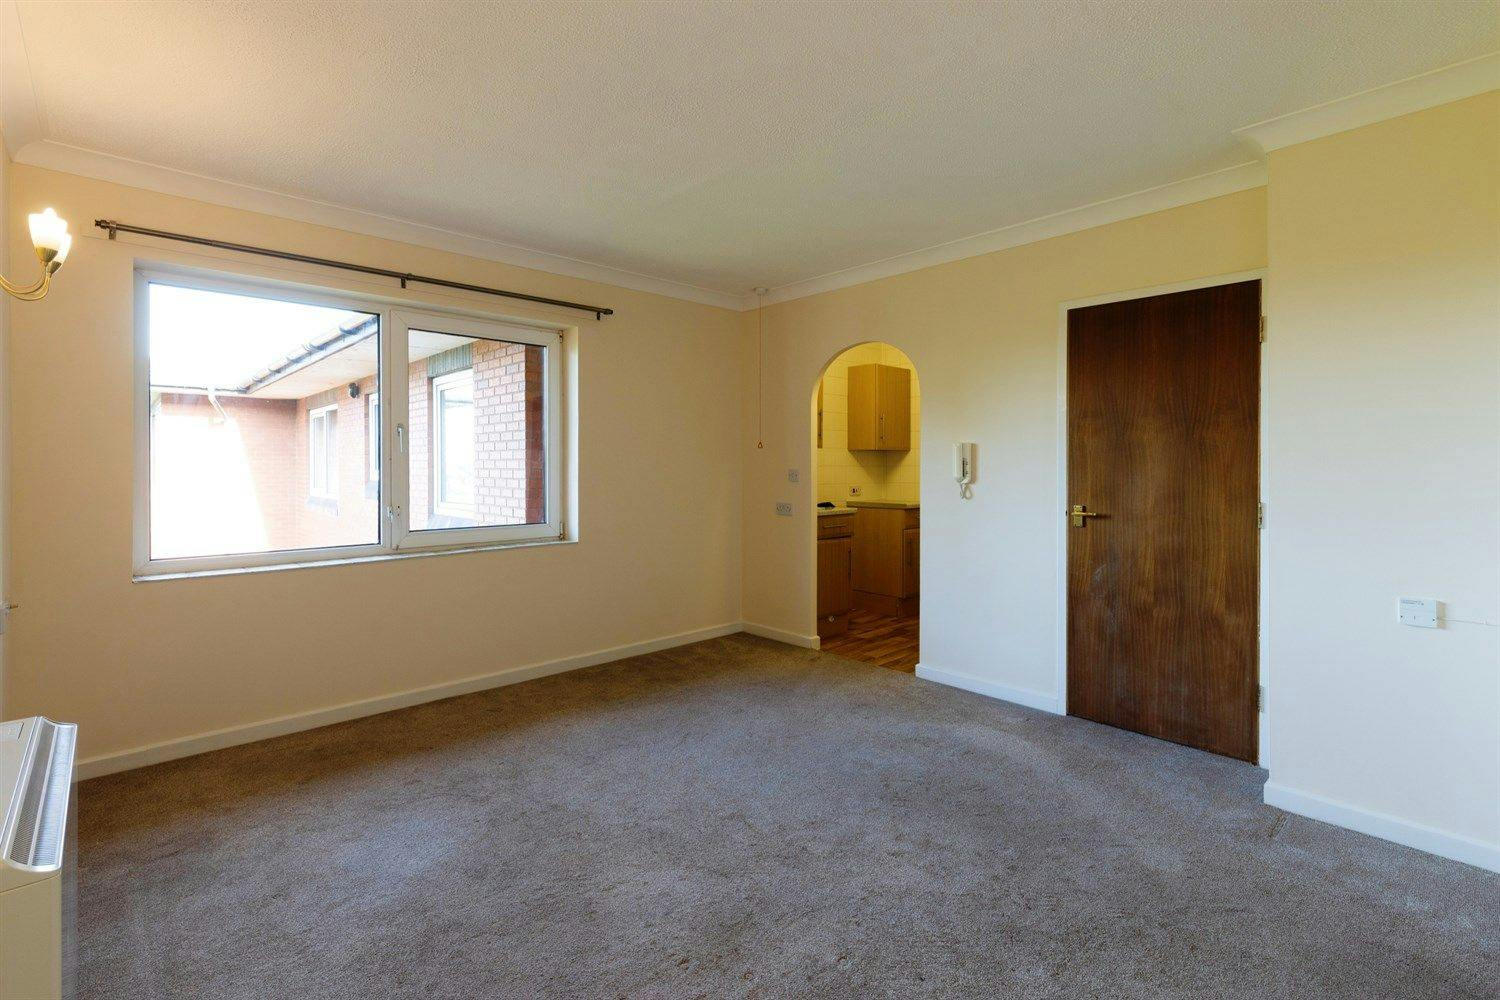 Living Room at Homespa House Retirement Apartment in Cheltenham, Gloucestershire